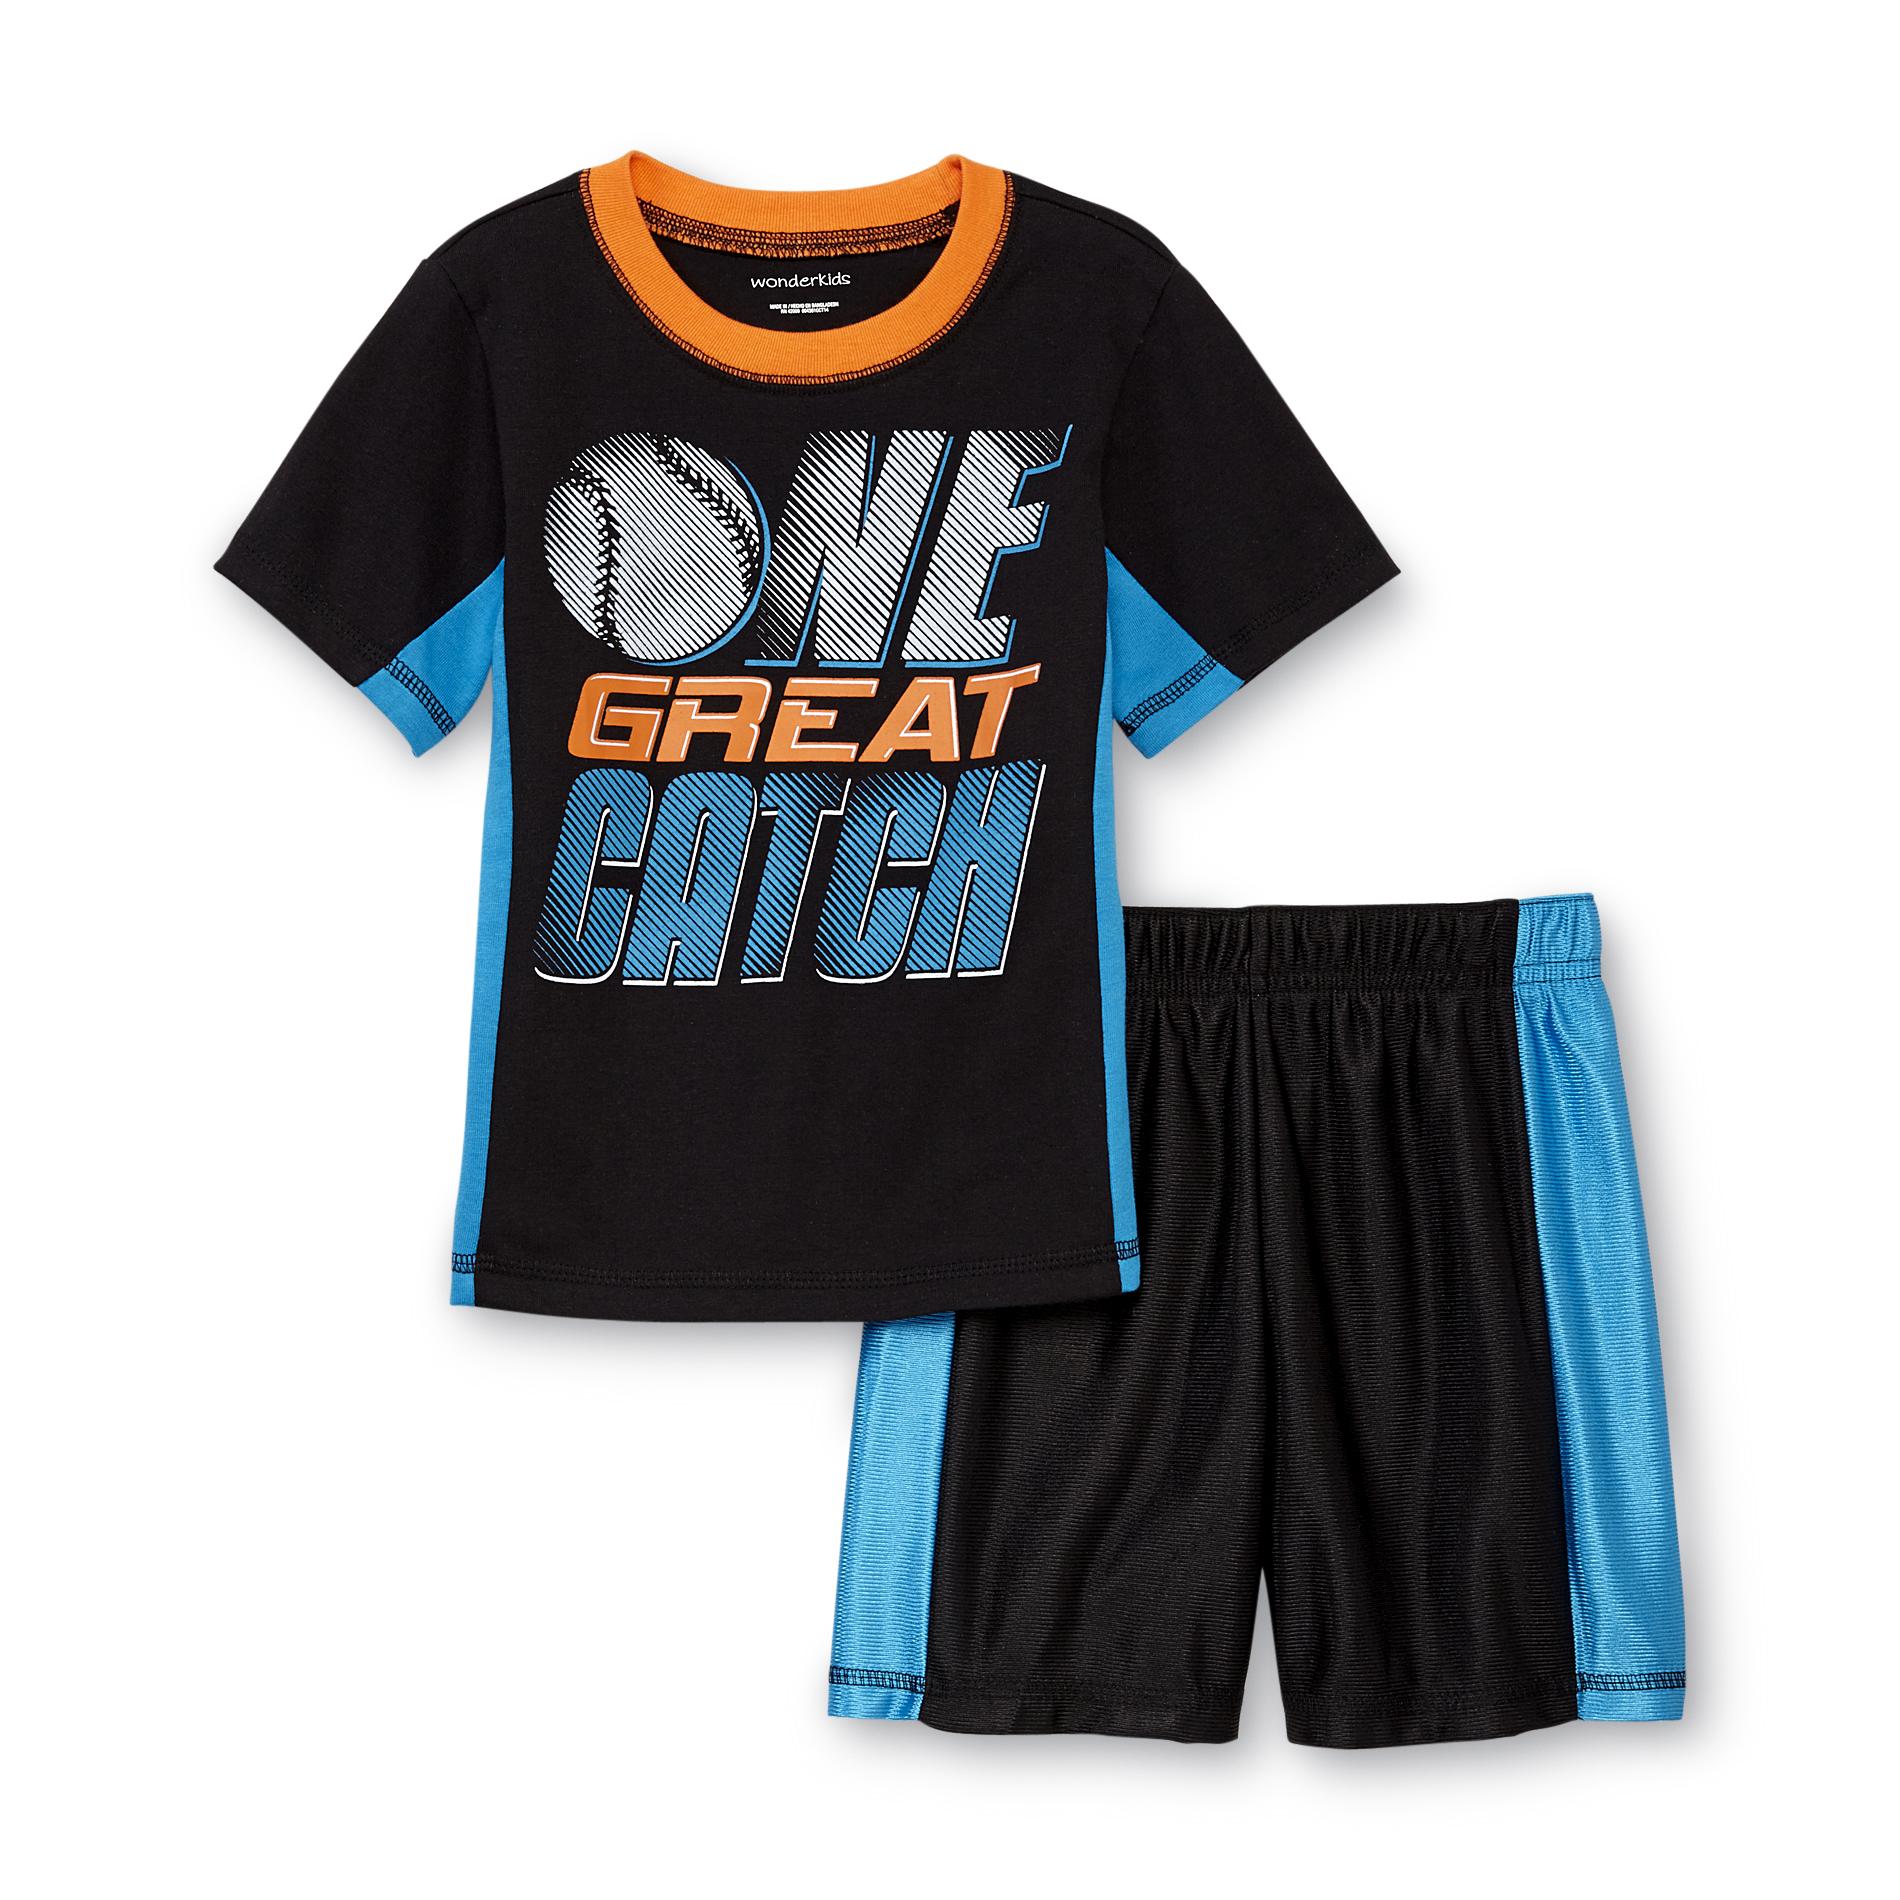 WonderKids Infant & Toddler Boy's T-Shirt & Dazzle Shorts - Great Catch